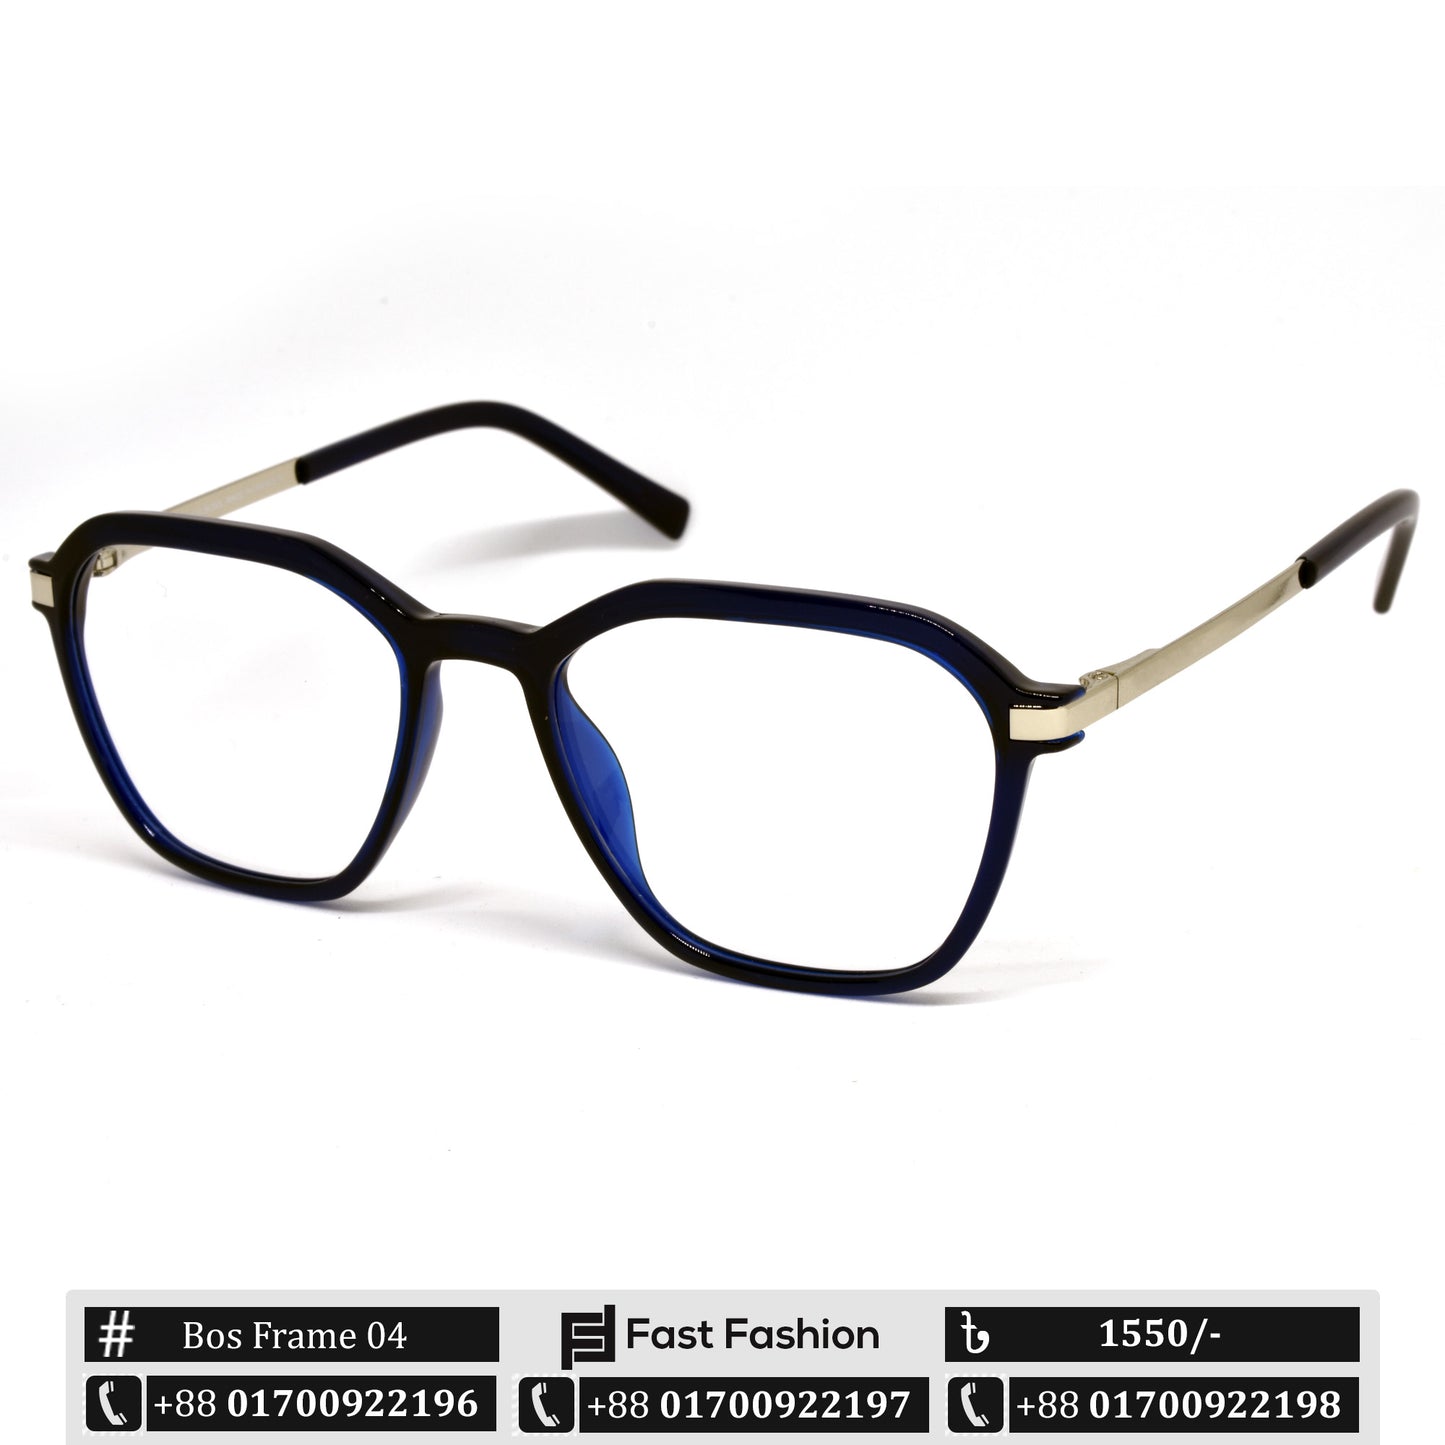 Trendy Stylish Optic Frame | Bos Frame 04 | Premium Quality